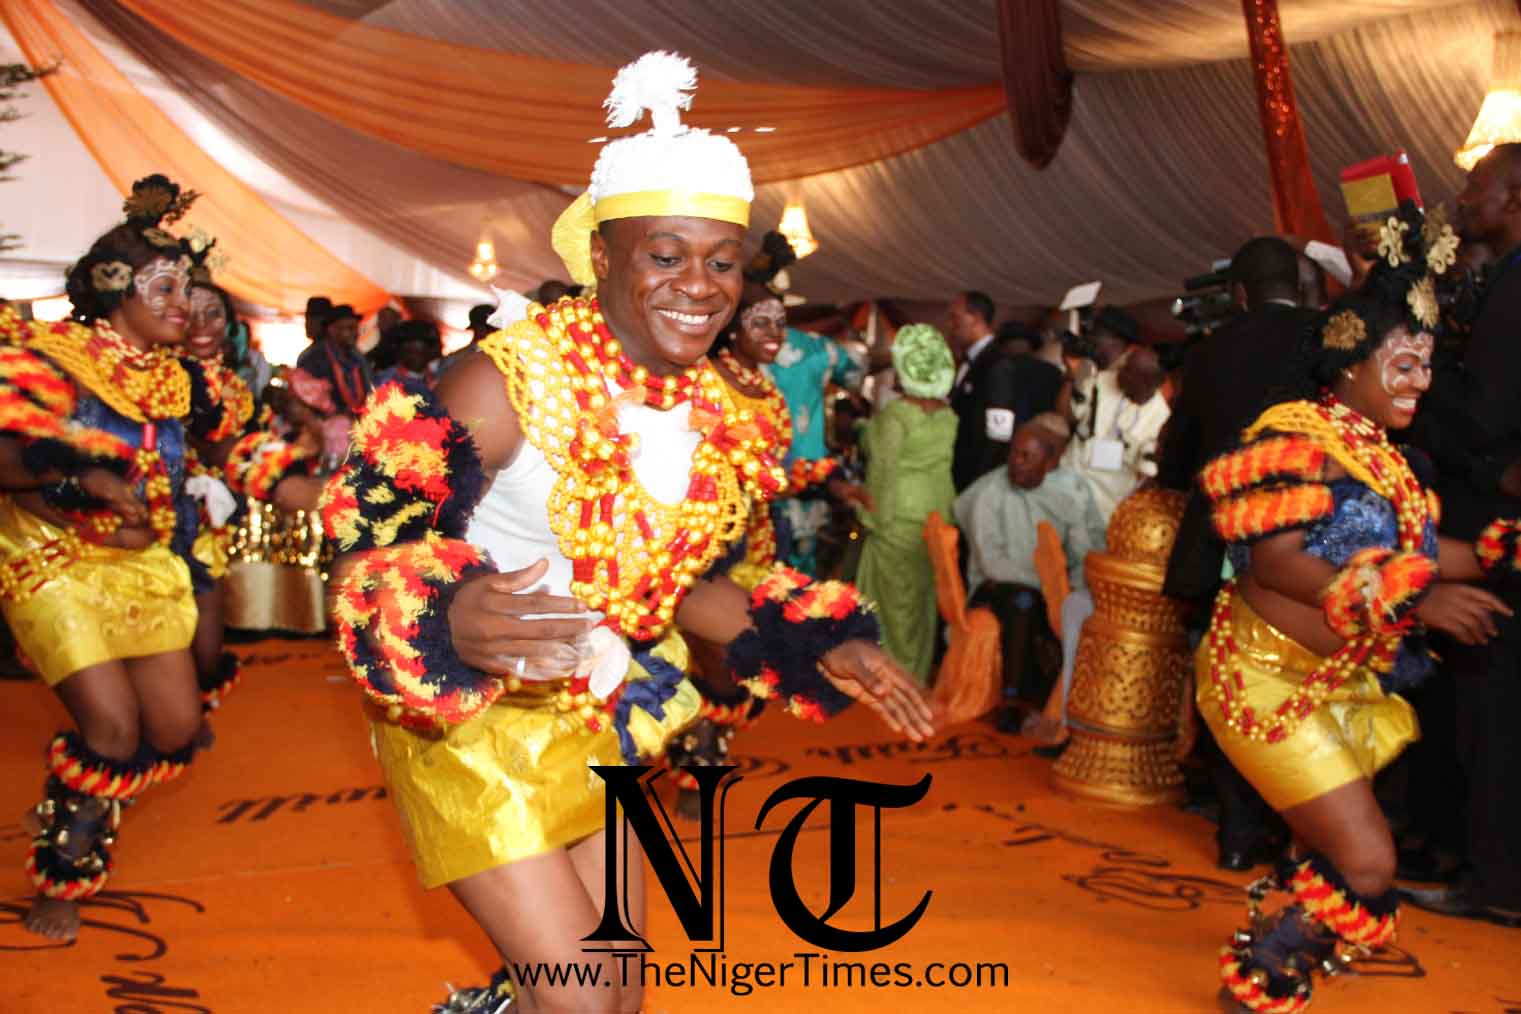 The-niger-times-godswill-faith-wedding-Traditional-Bayelsa-goddluck-35.jpg